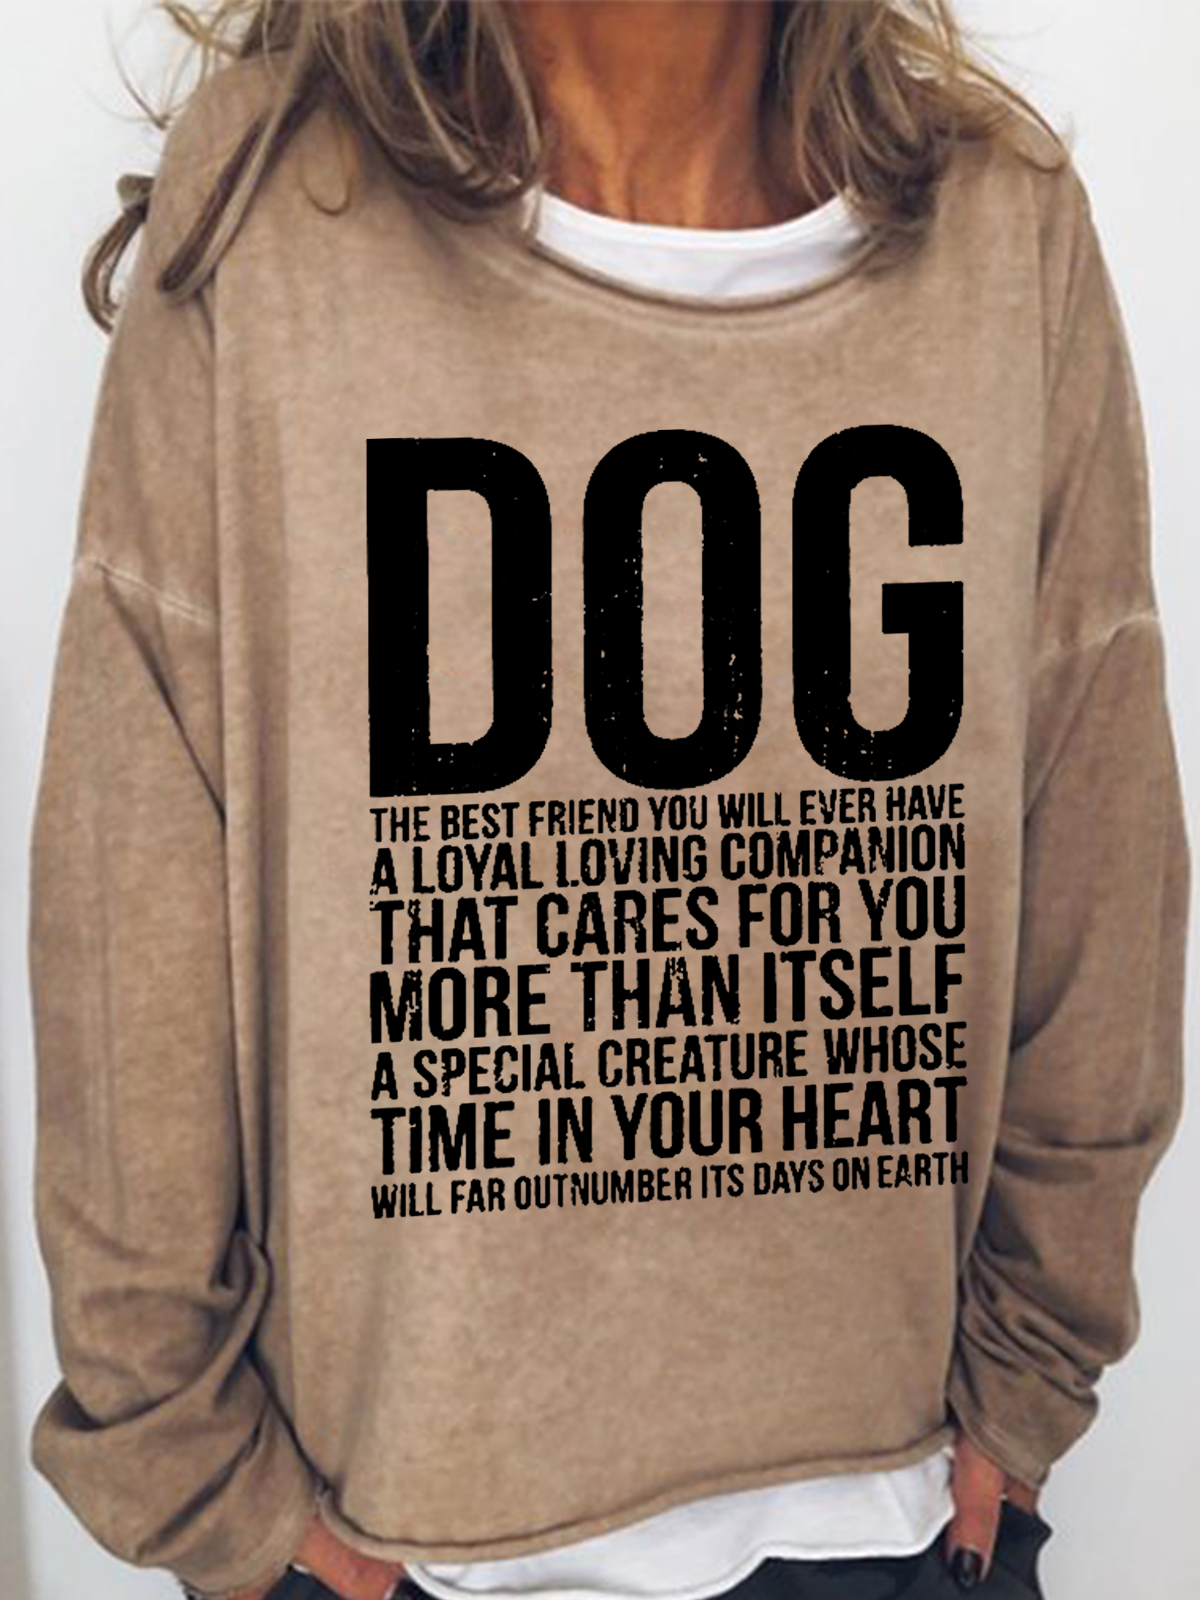 Women's Funny Dog Crew Neck Regular Fit Casual Cotton-Blend Sweatshirt